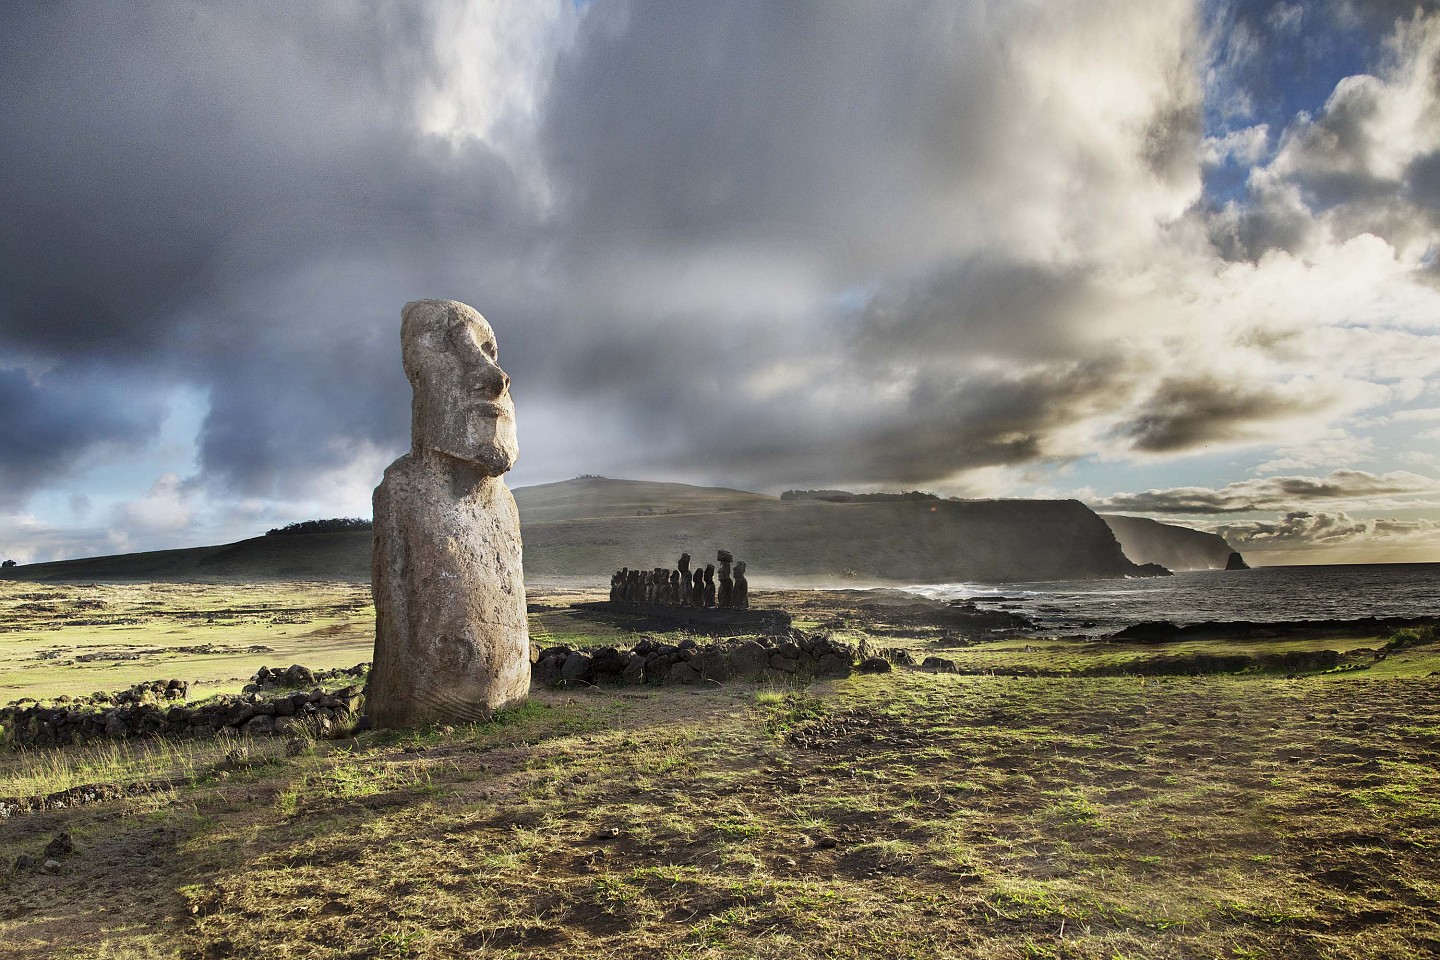 Steve McCurry, Easter Island - 10020NF, 2018
FujiFlex Crystal Archive Print, 30 x 40 in. (76.2 x 101.6 cm)
10020NF